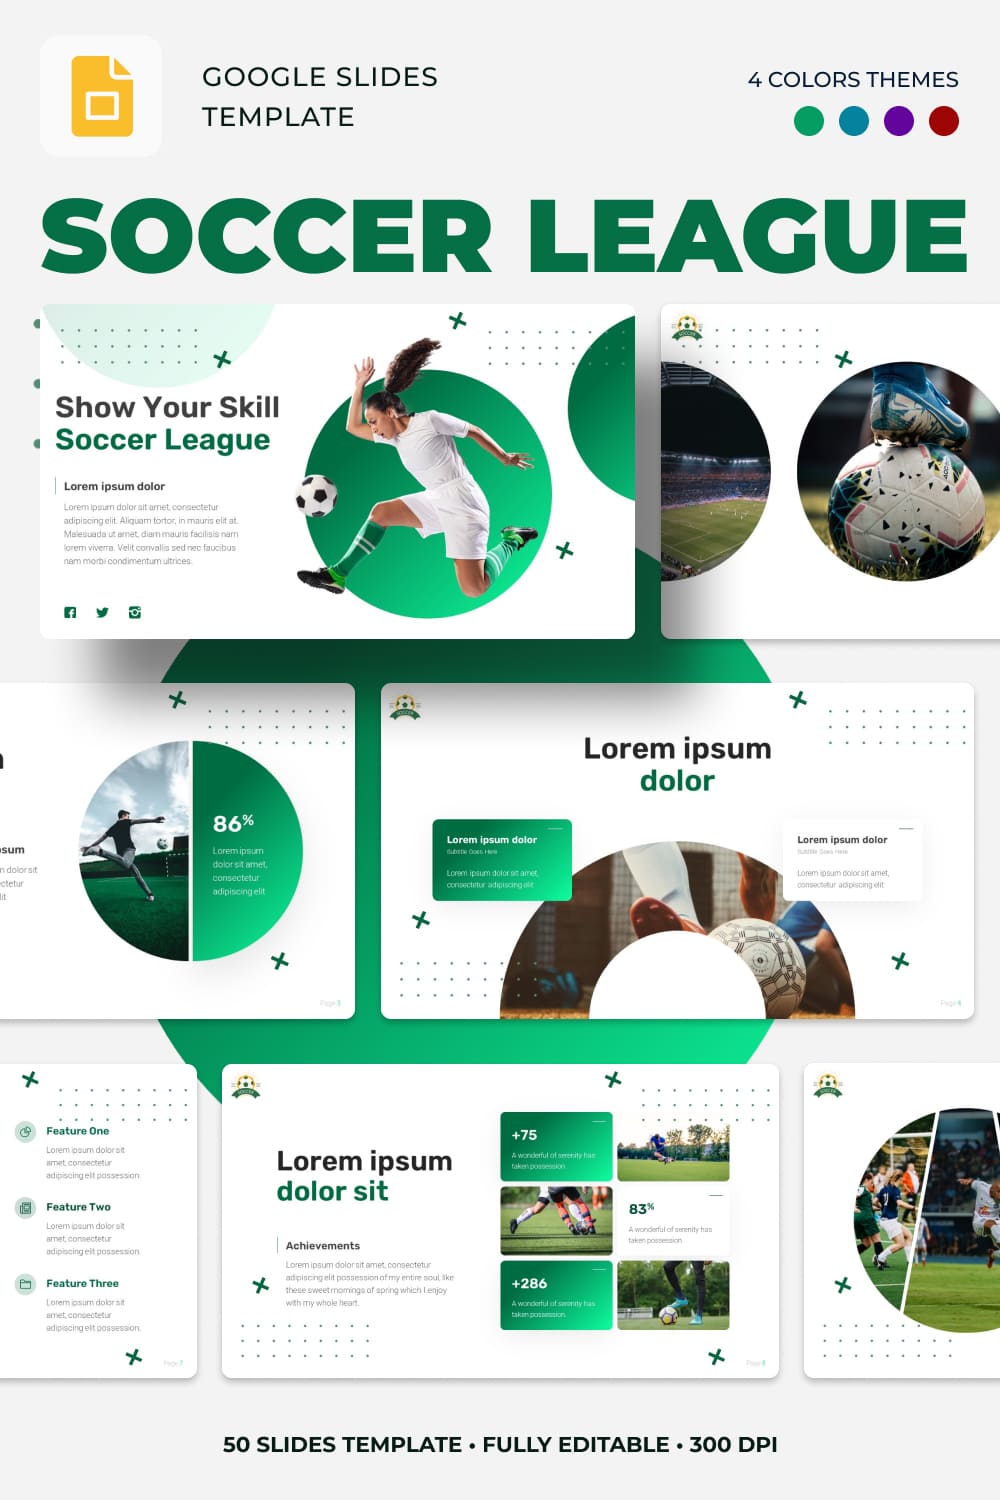 Soccer League Google Slides Theme - Pinterest.